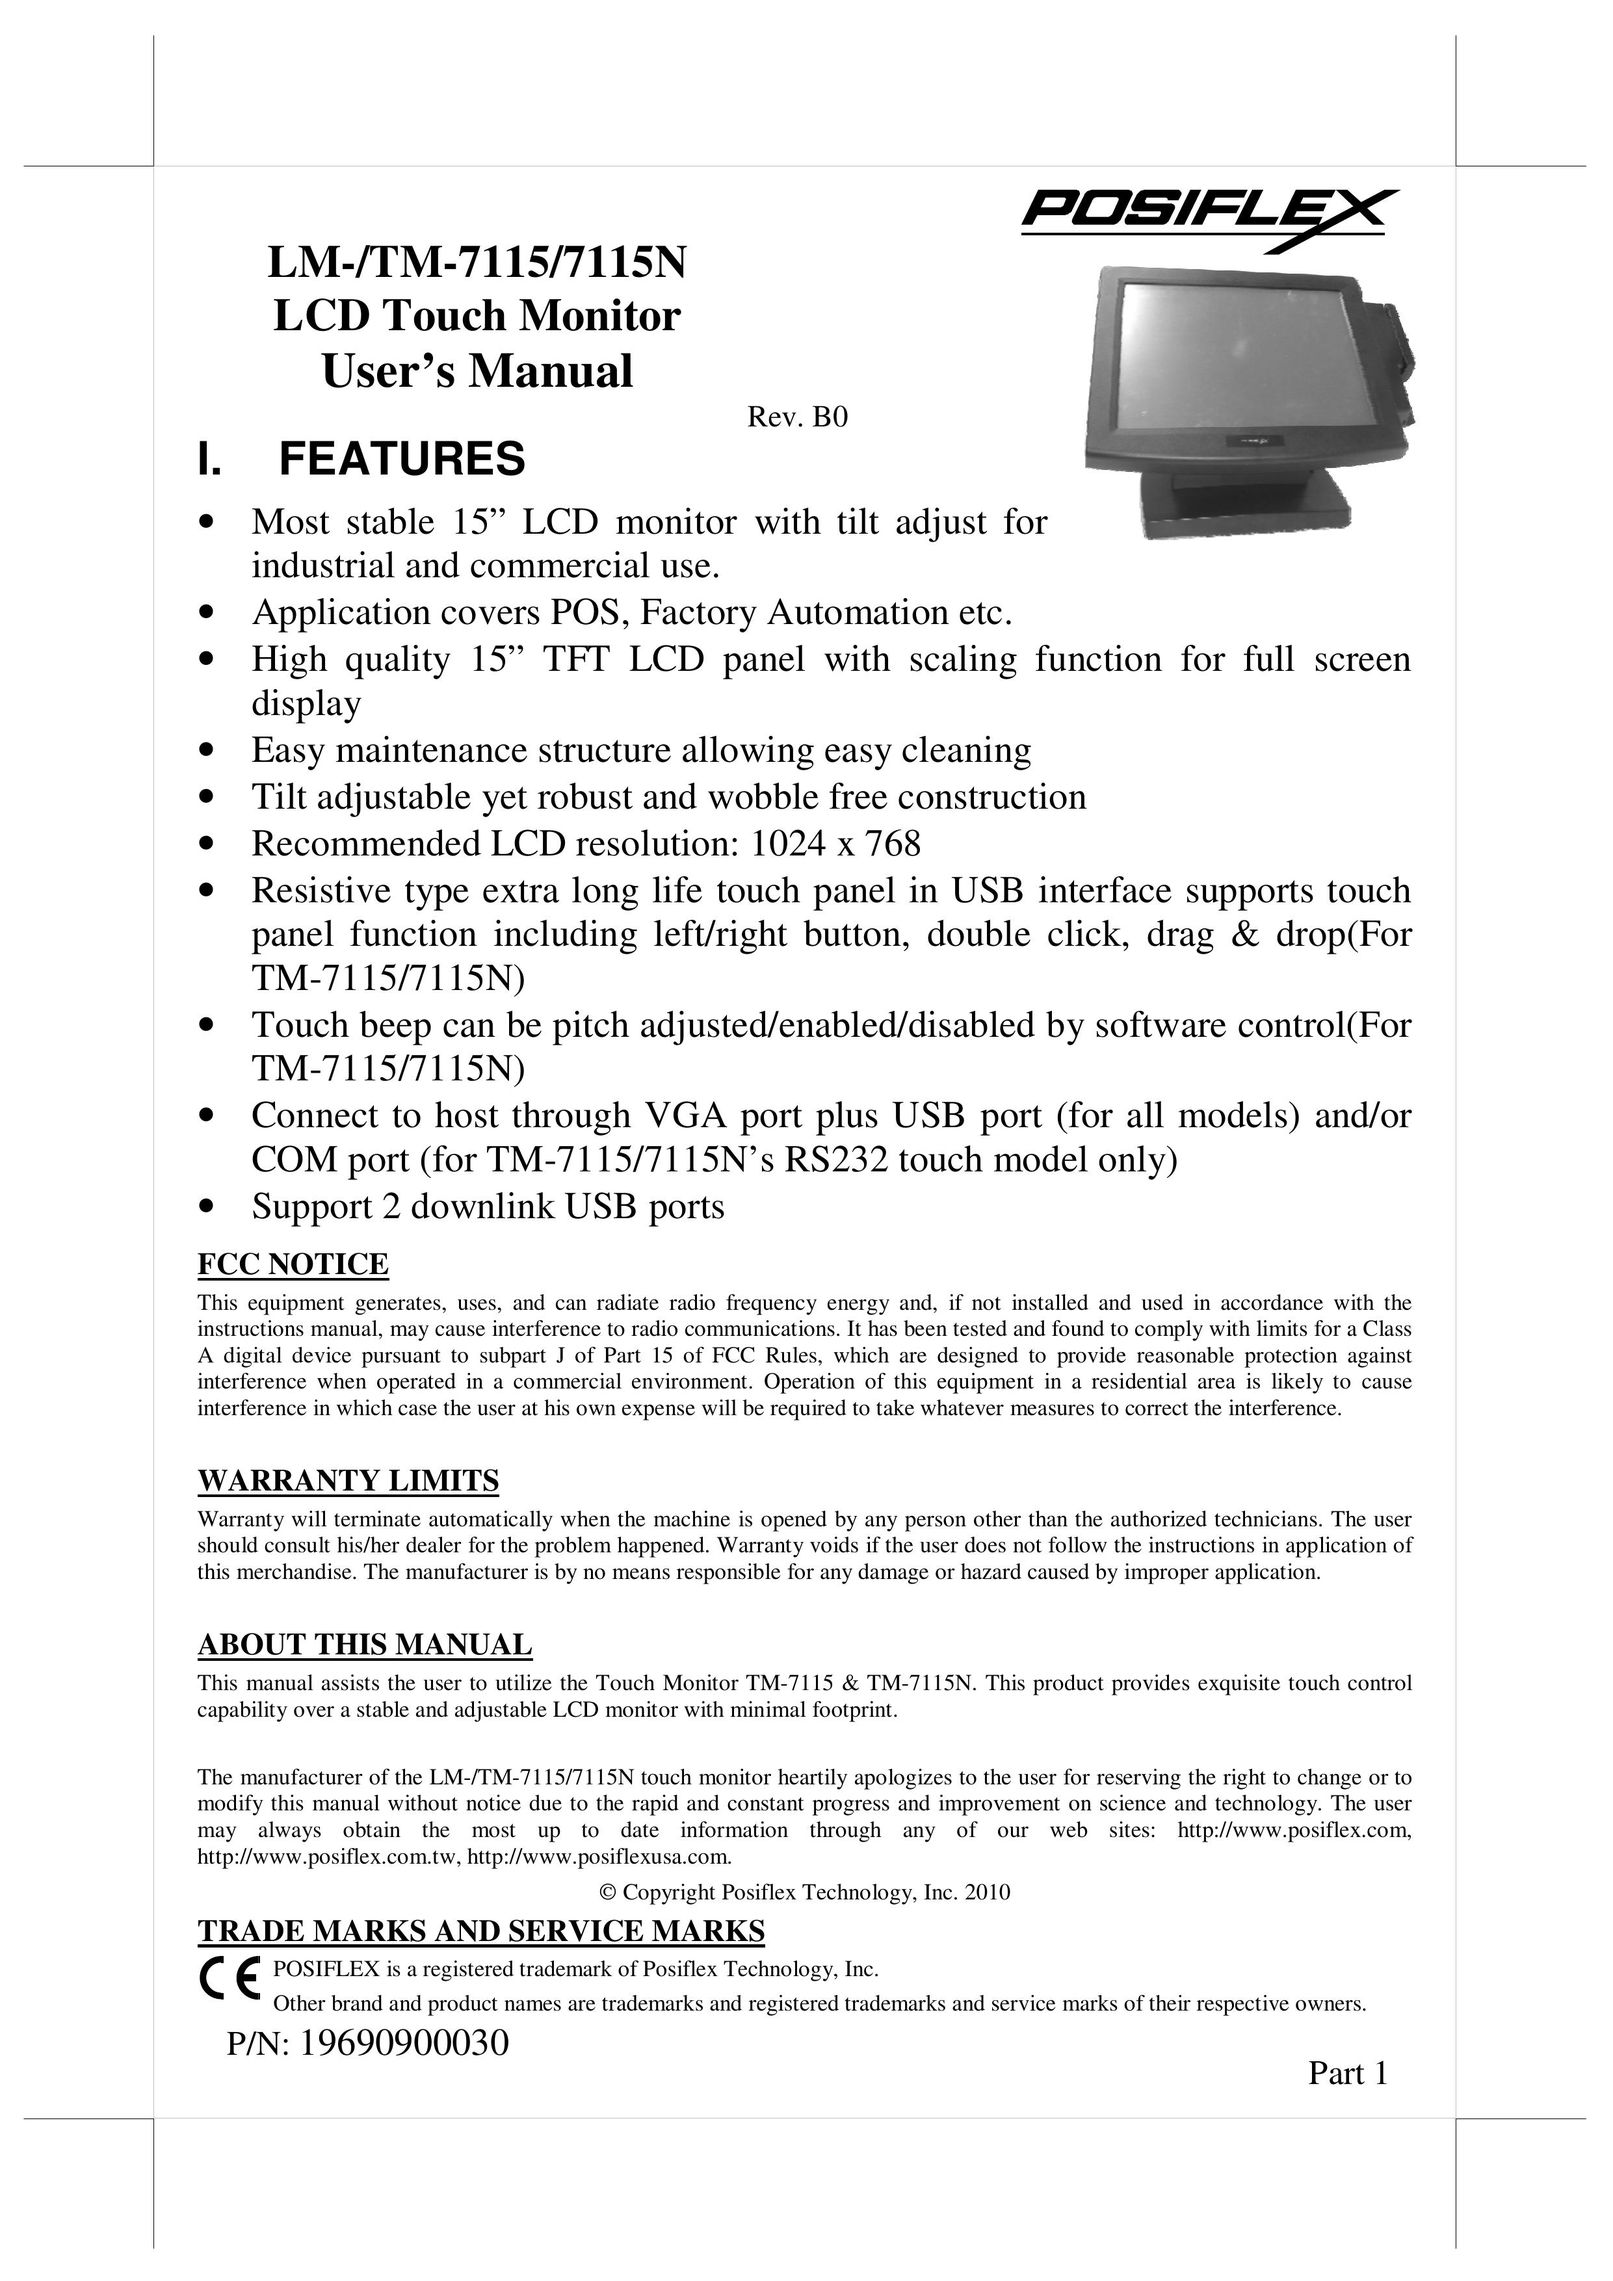 POSIFLEX Business Machines LM-/TM-7115/7115N Car Video System User Manual